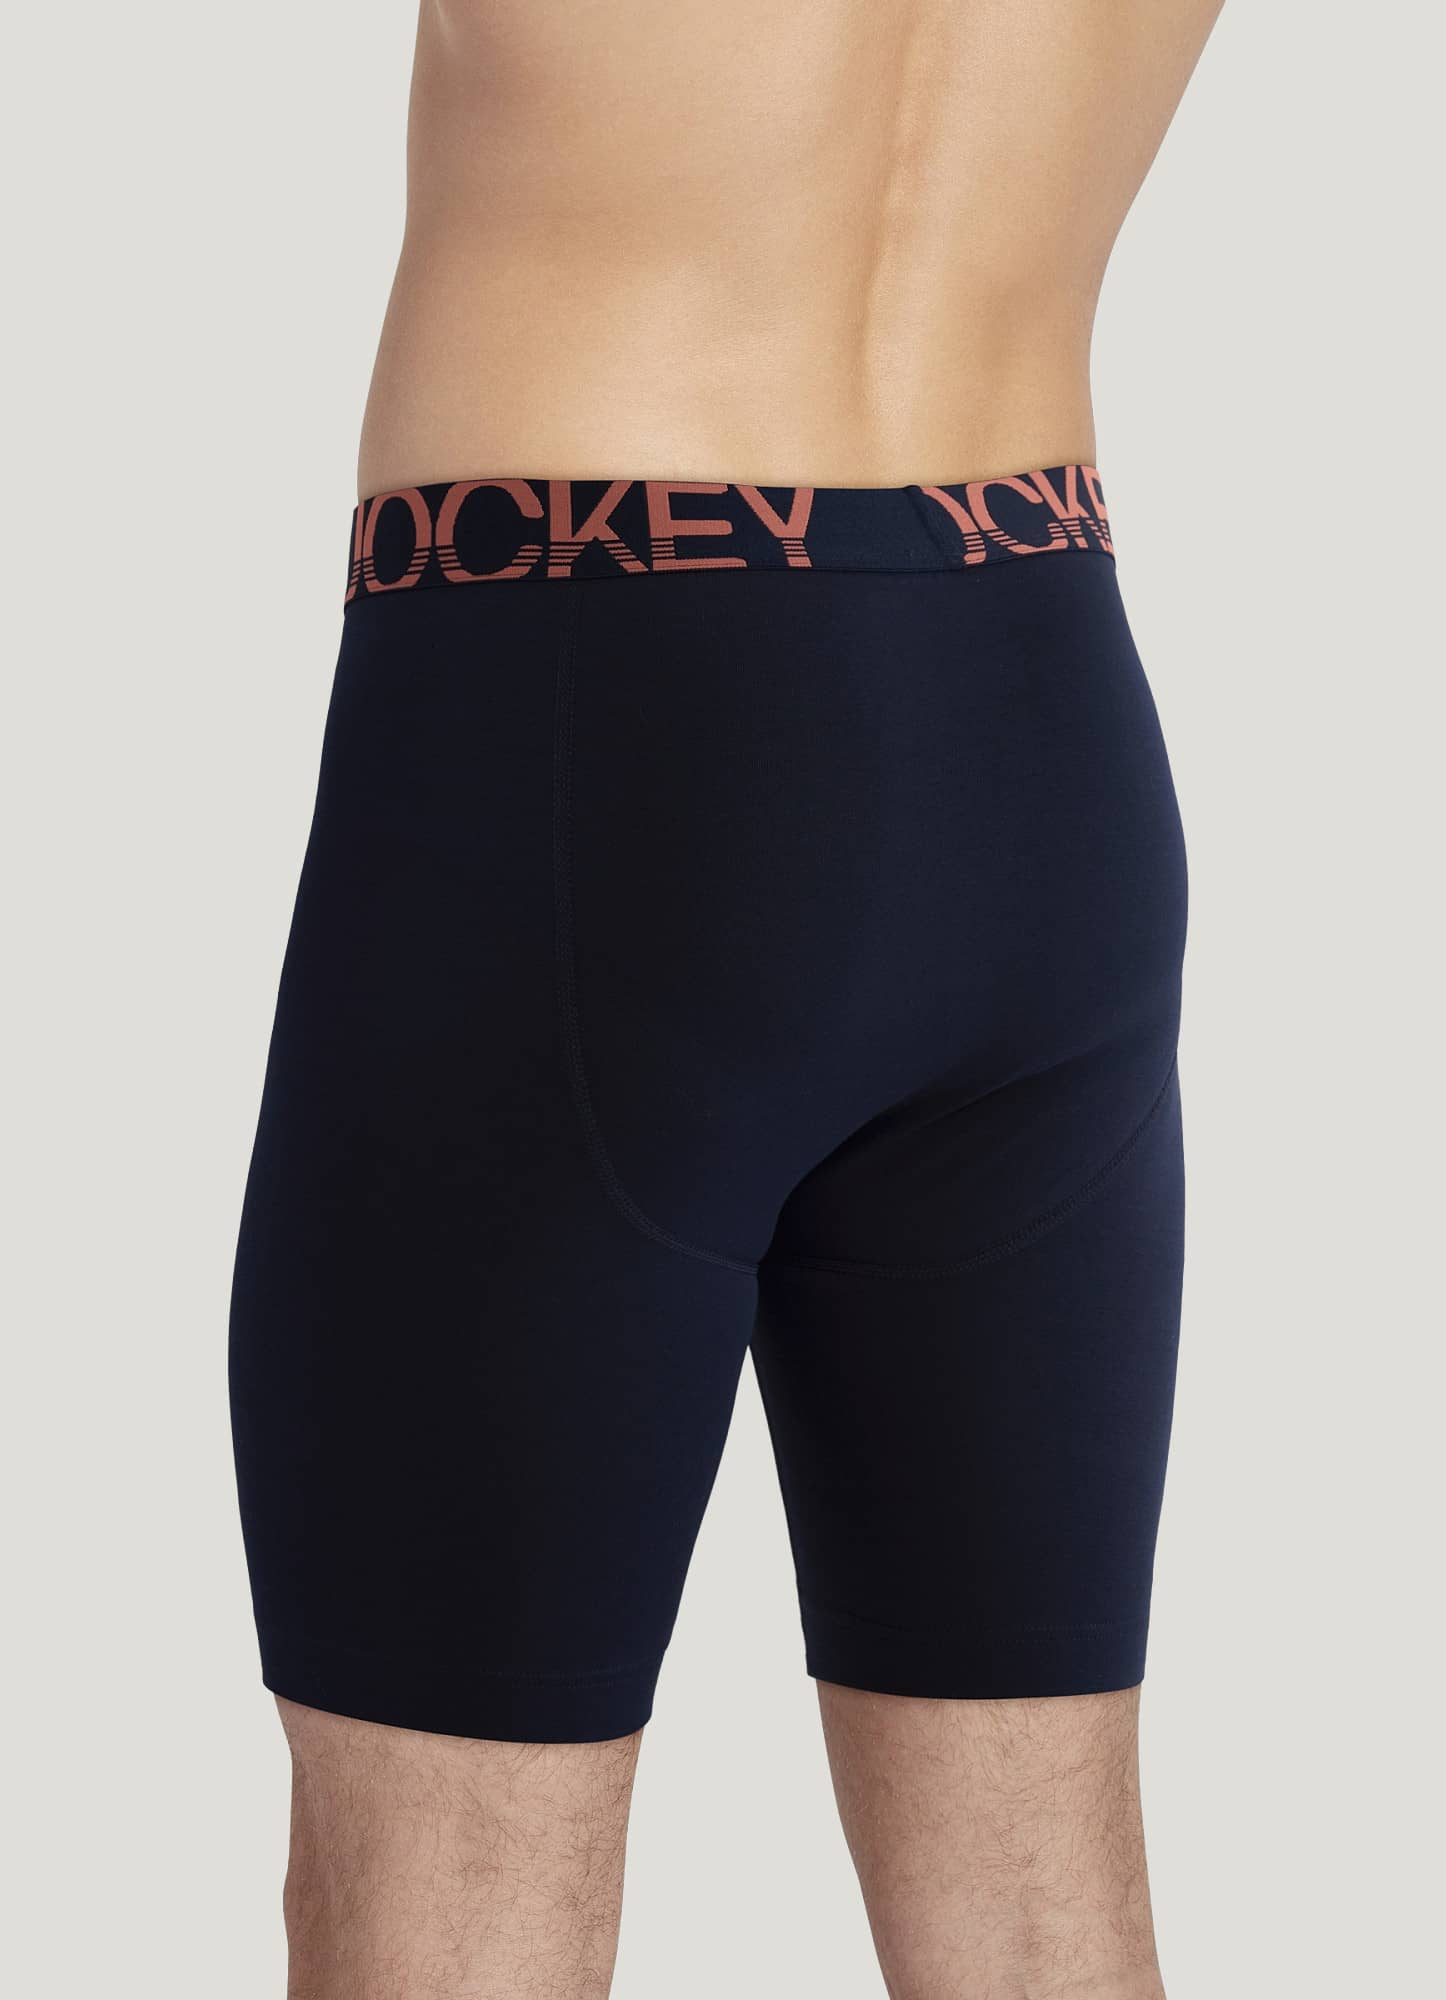 Lucky Brand Mens Cotton Stretch Long Leg Boxer Briefs Underwear